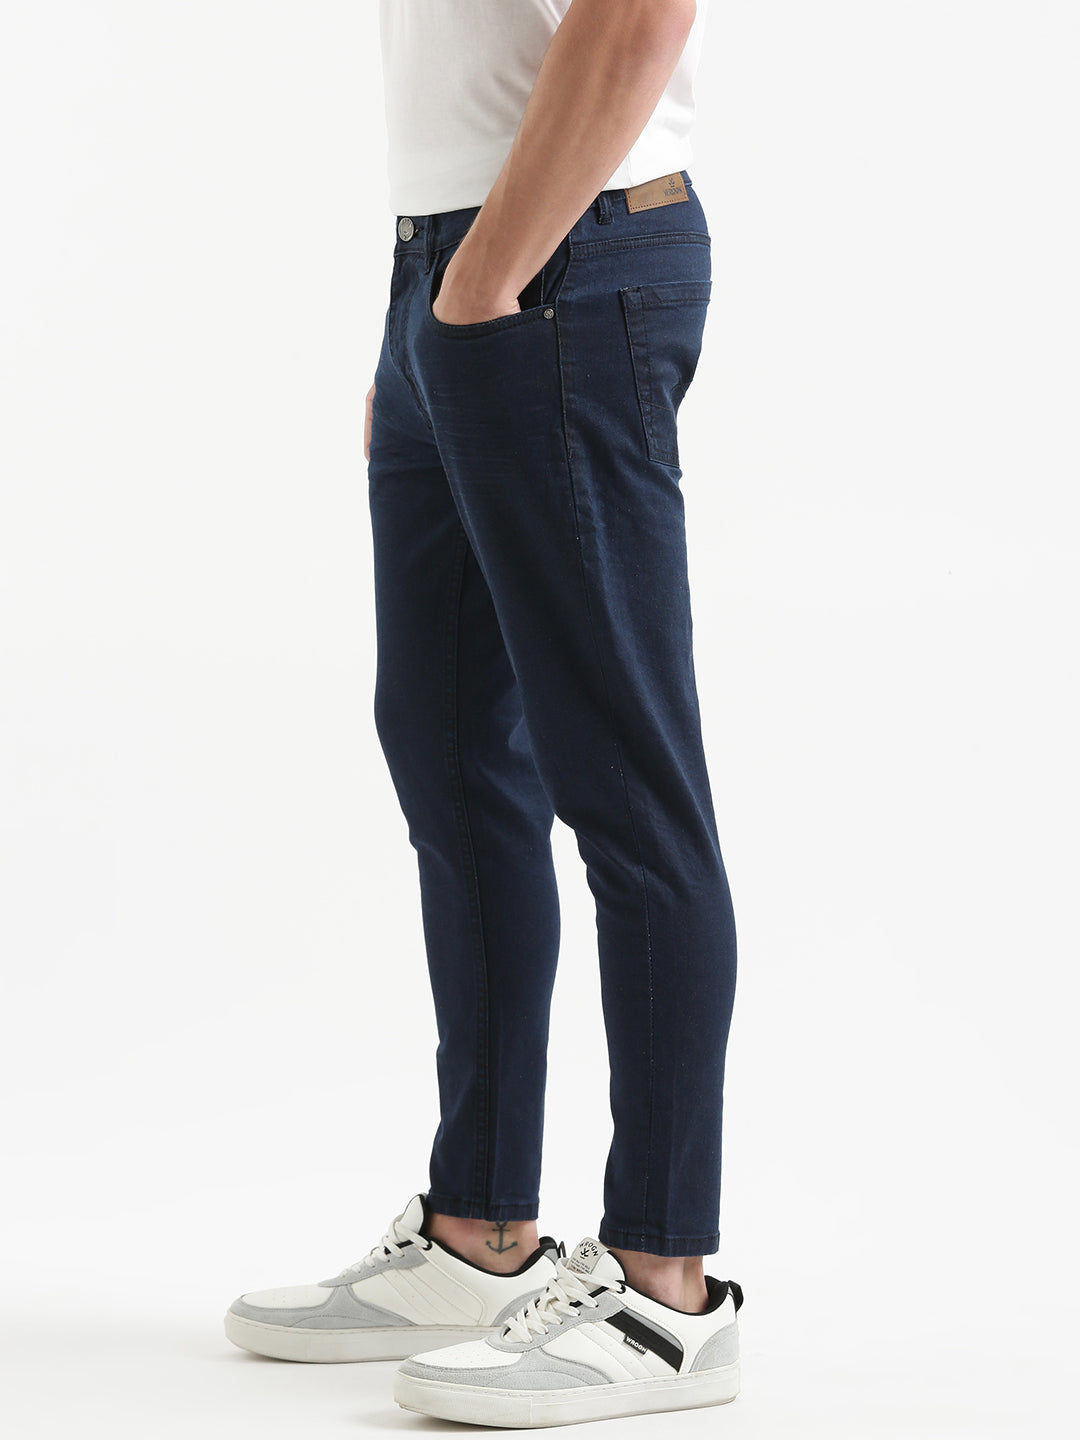 Basic Fuse Navy Blue Slim Fit Jeans